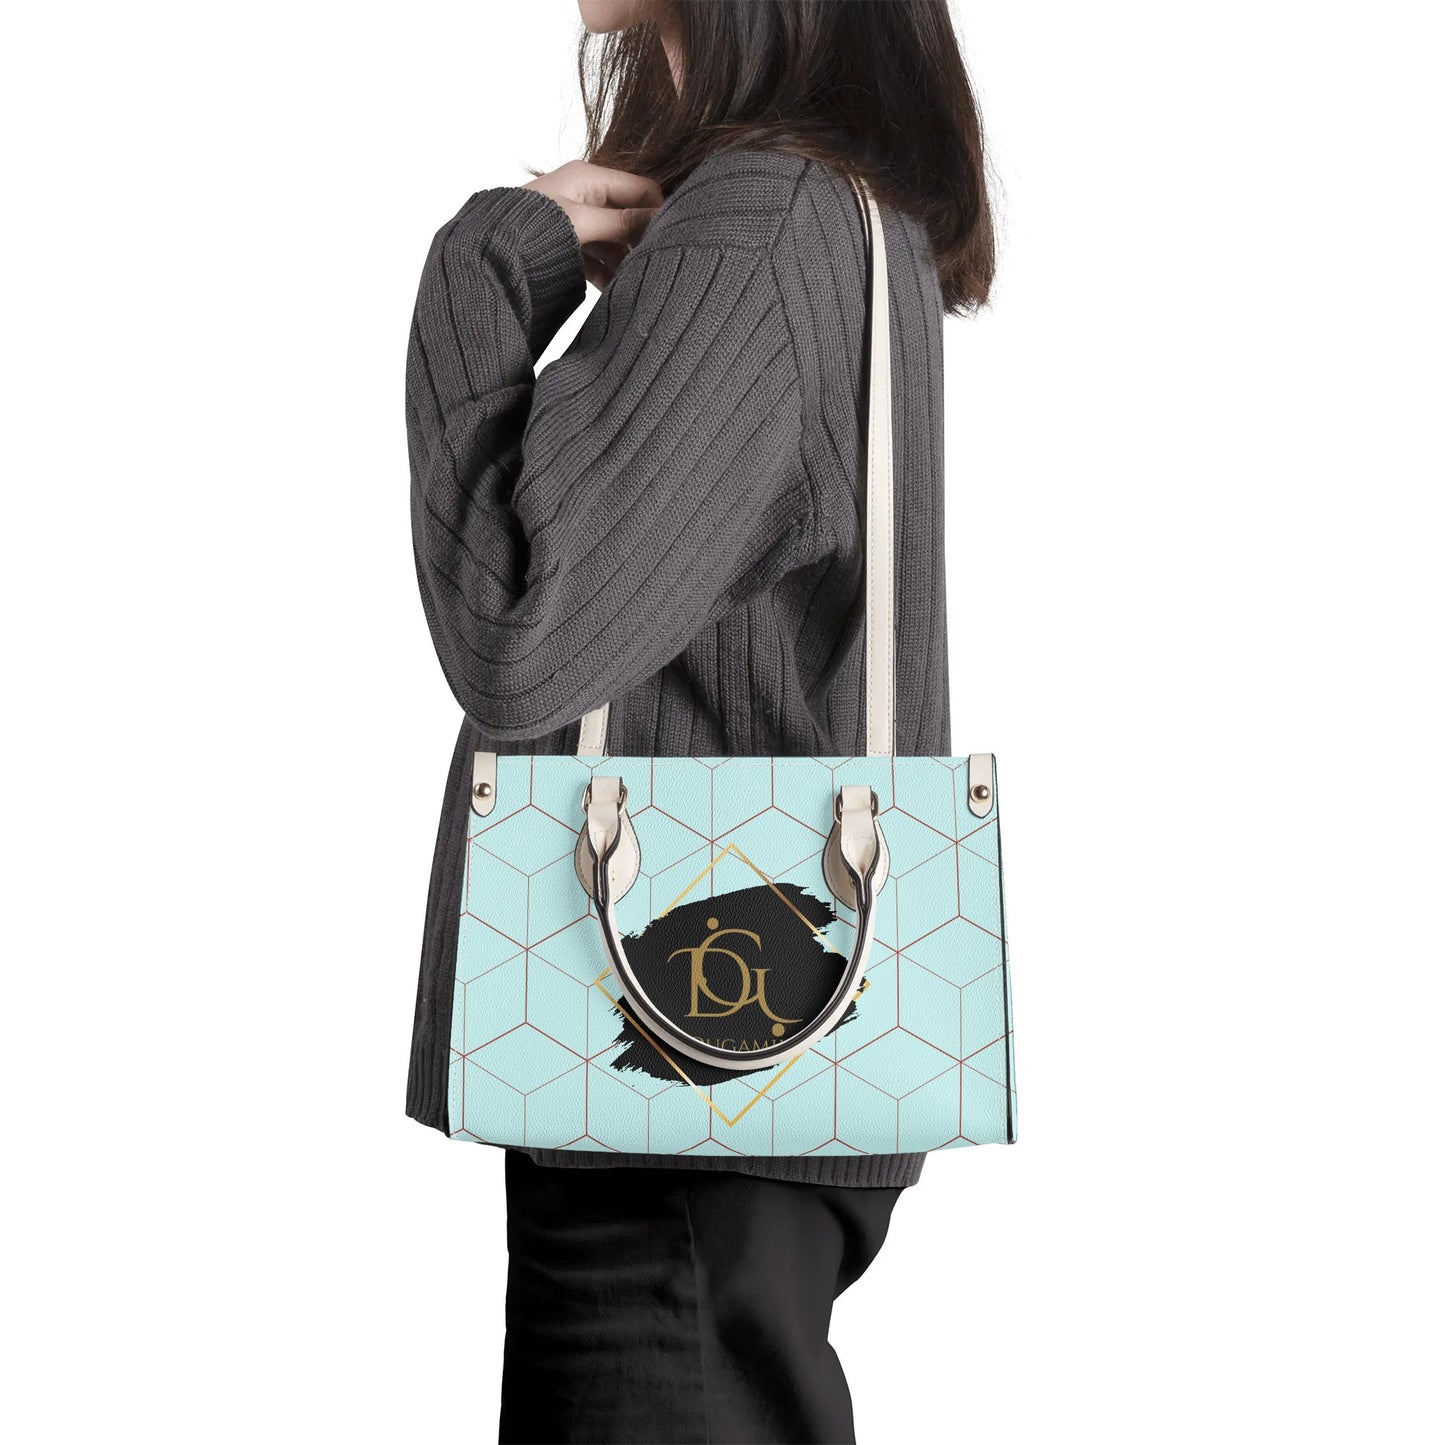 DuGamii Luxury Women's Clear Water Blue PU Handbag With Shoulder Strap